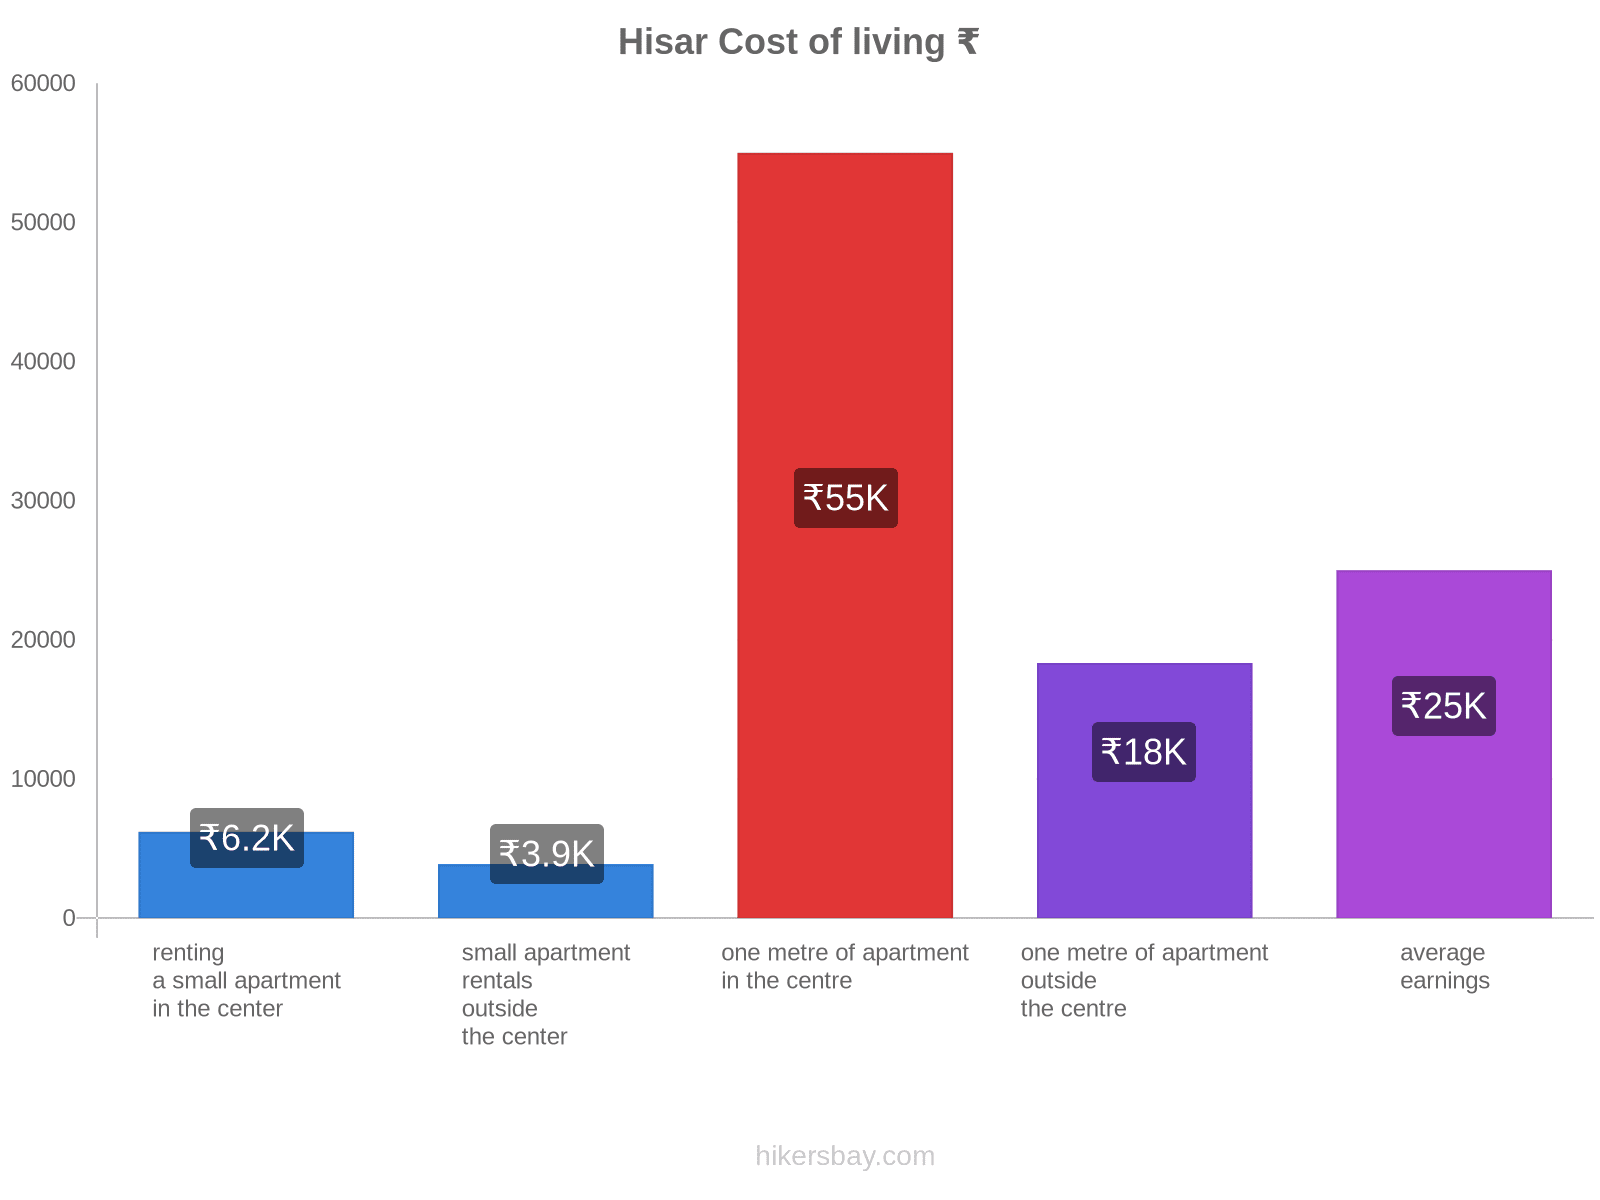 Hisar cost of living hikersbay.com